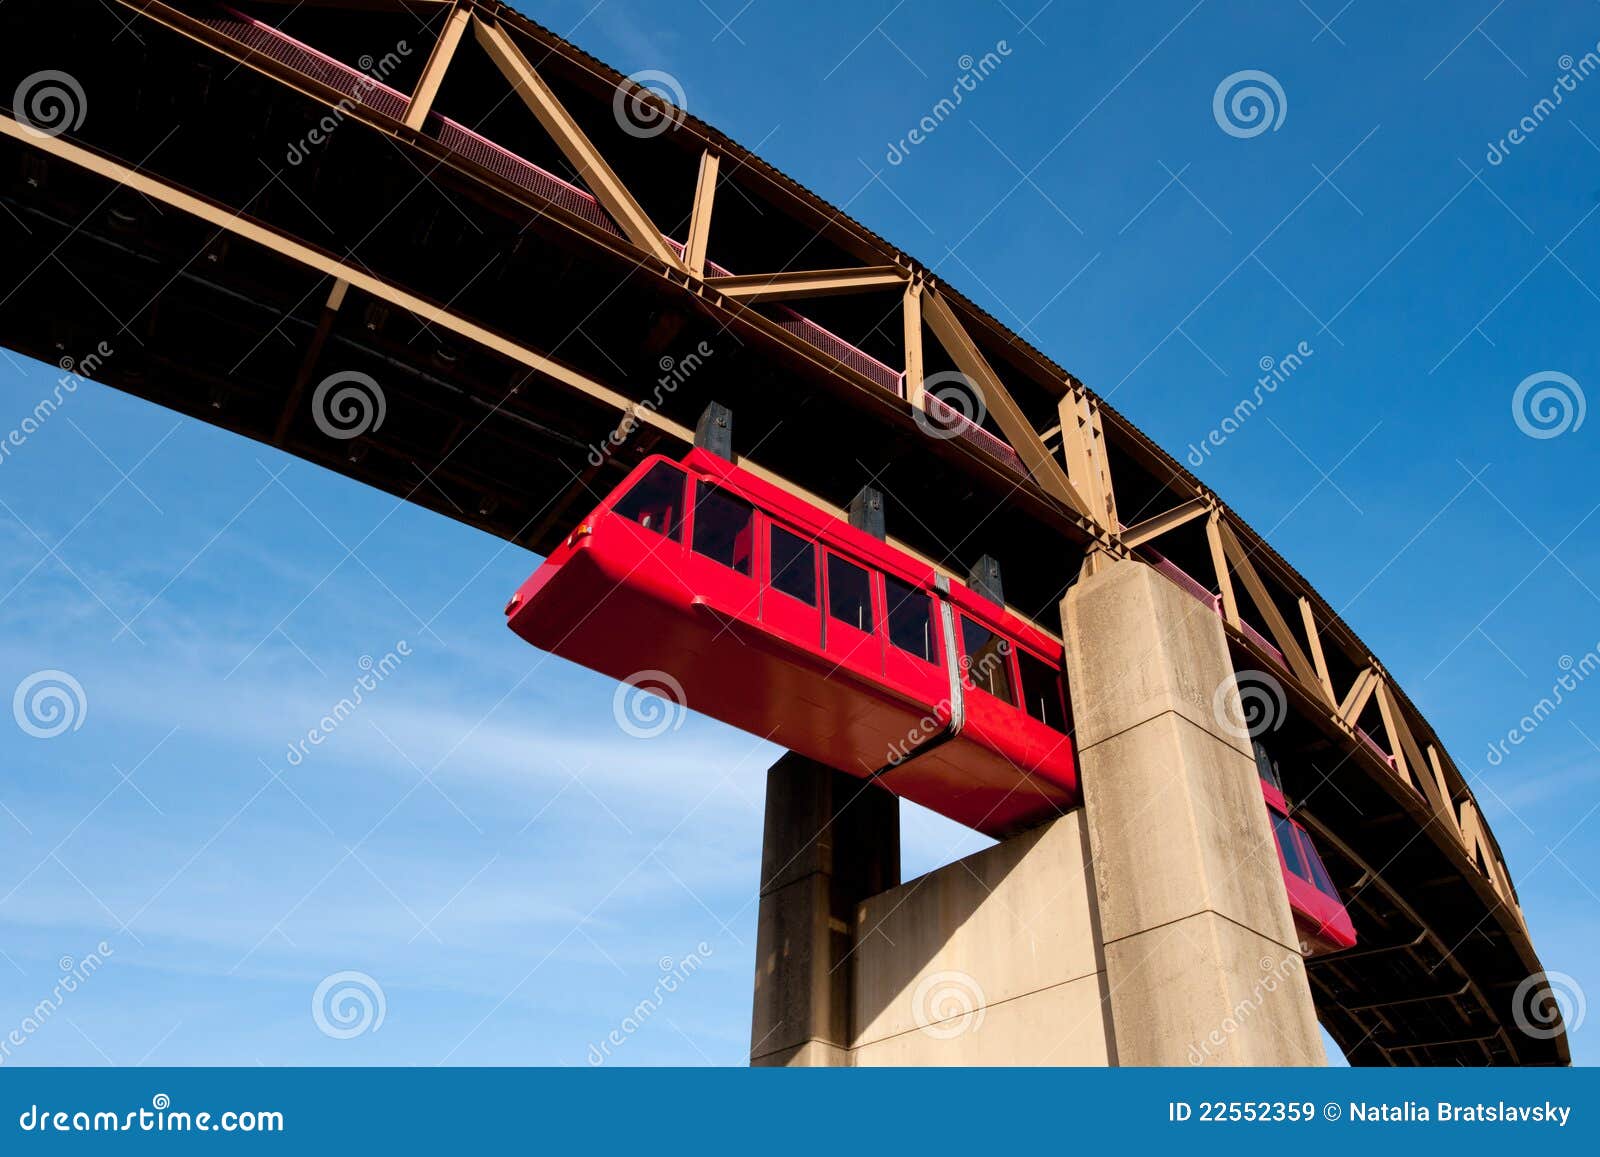 memphis monorail